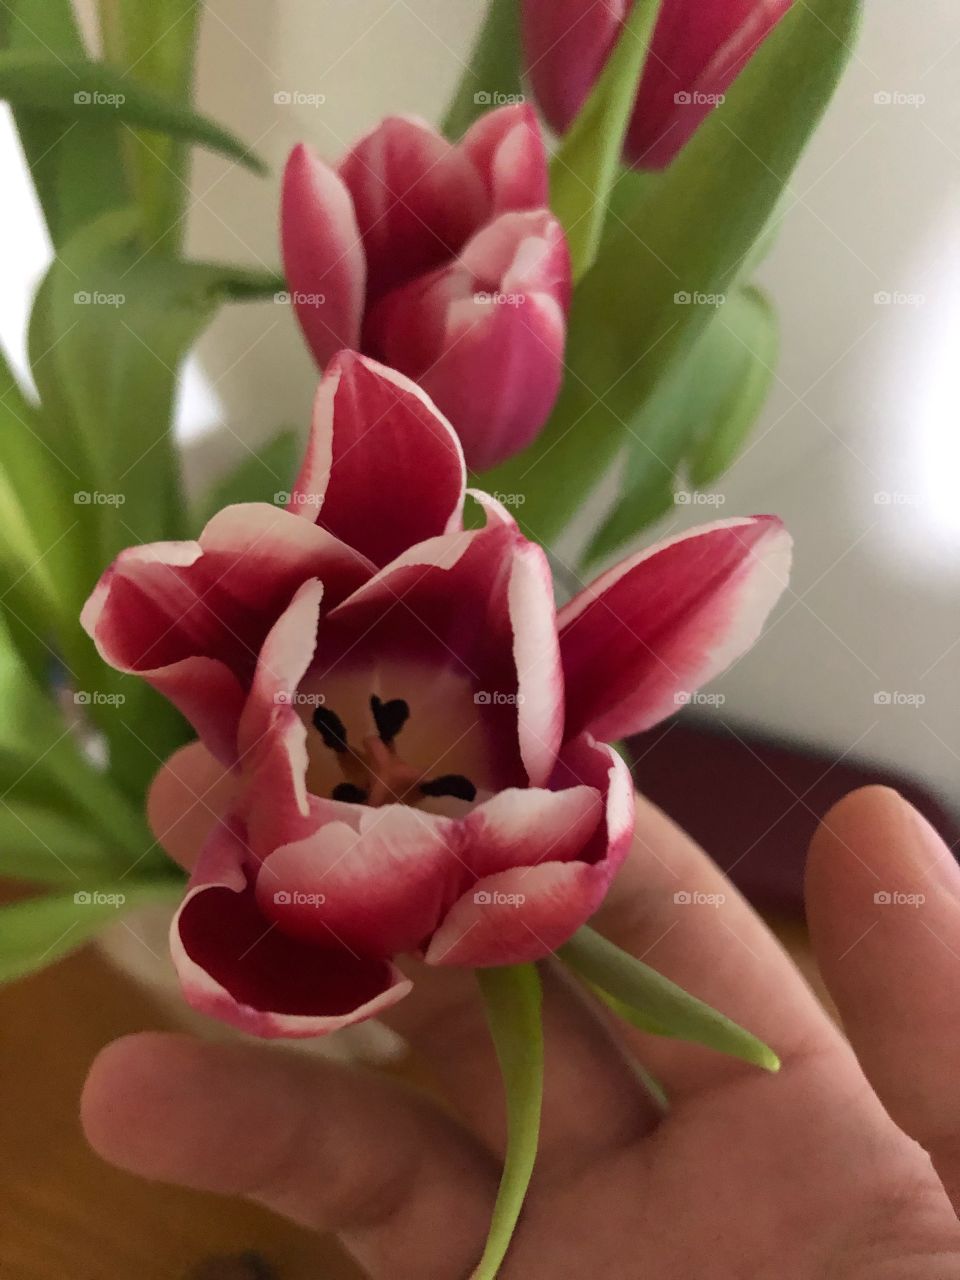 Tulips!